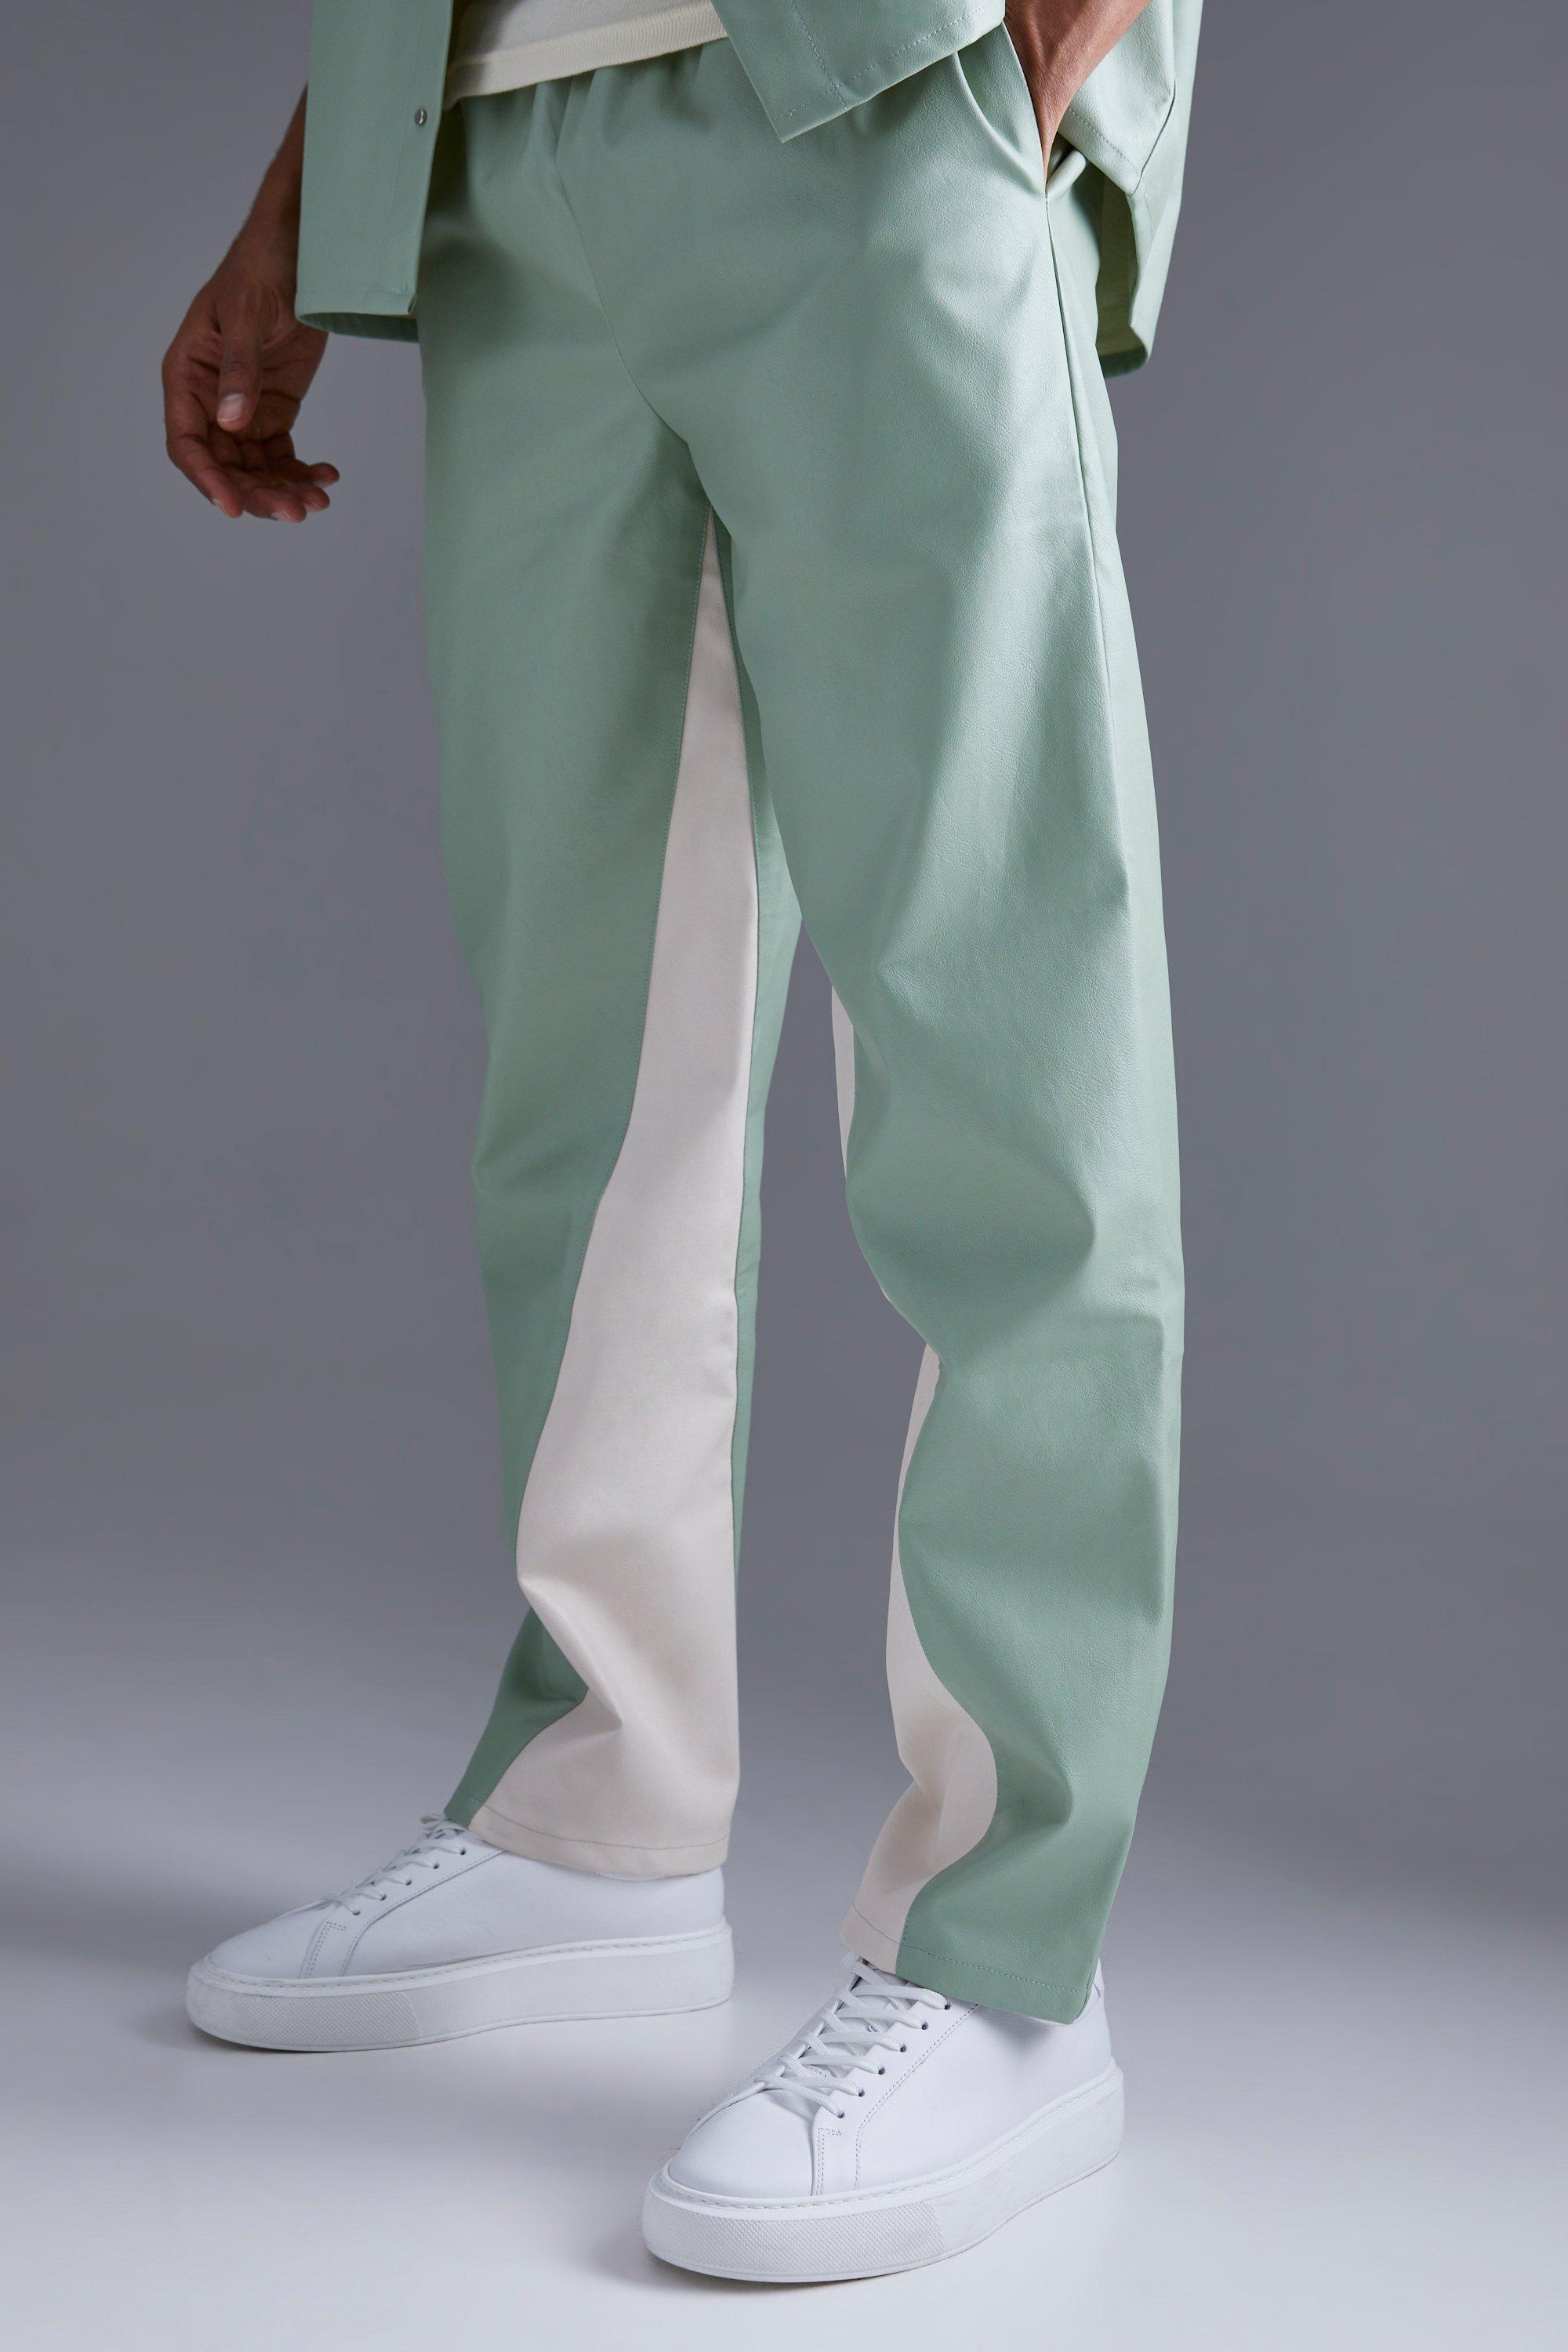 Green Men Trousers - Buy Green Men Trousers online in India